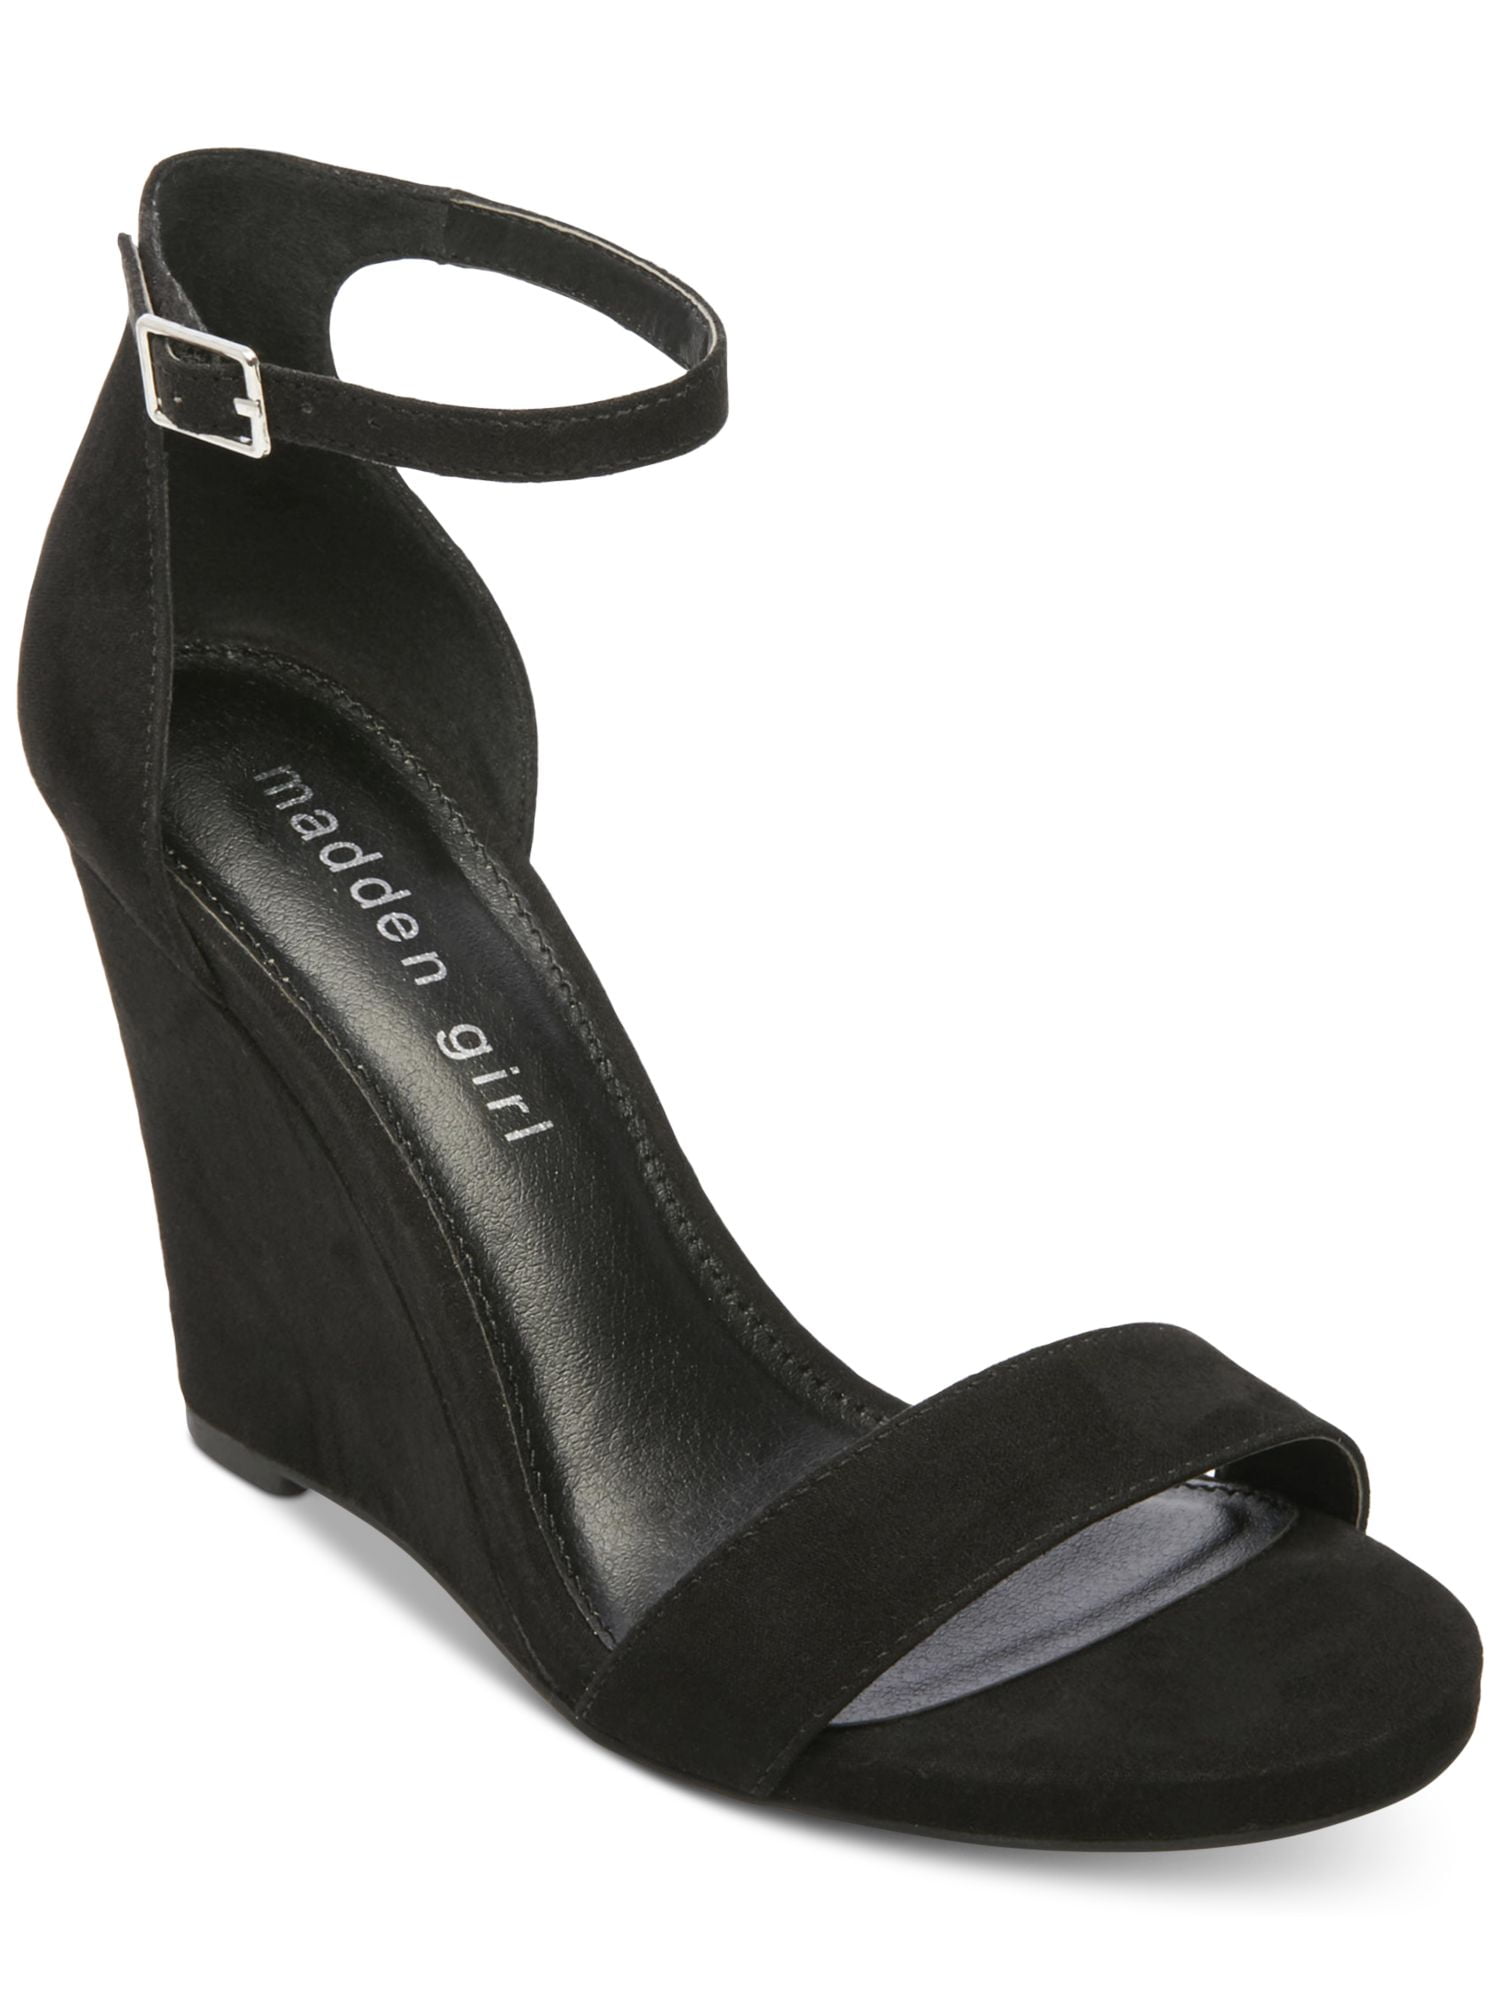 Ladies Ankle Boots Women Sock Detail Faux Suede Mid Heel Zip Wedge Shoes  Size | eBay